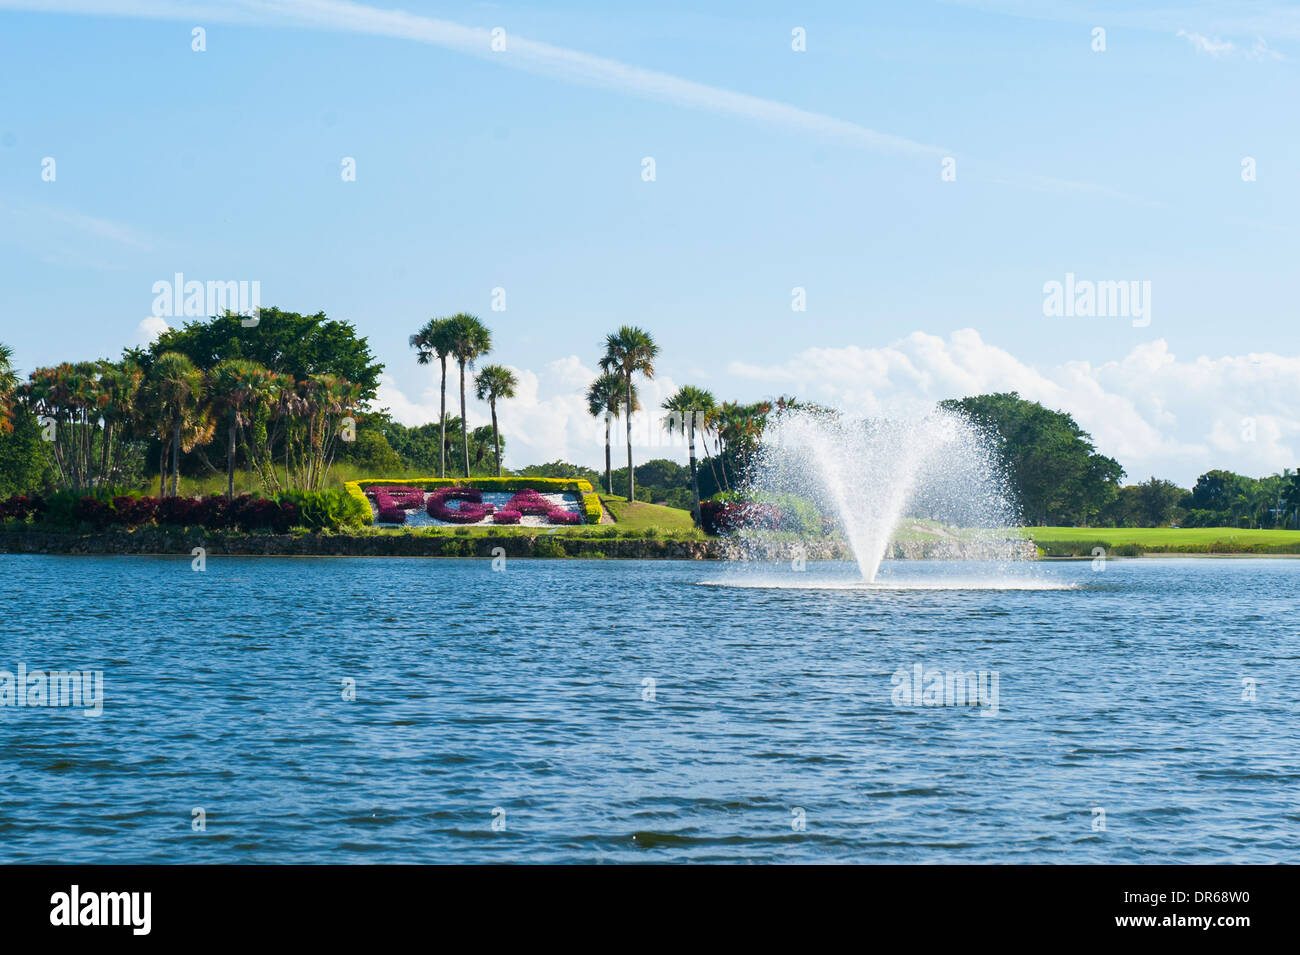 Usa Florida Pga National Golf Course Palm Beach Gardens See Wasser